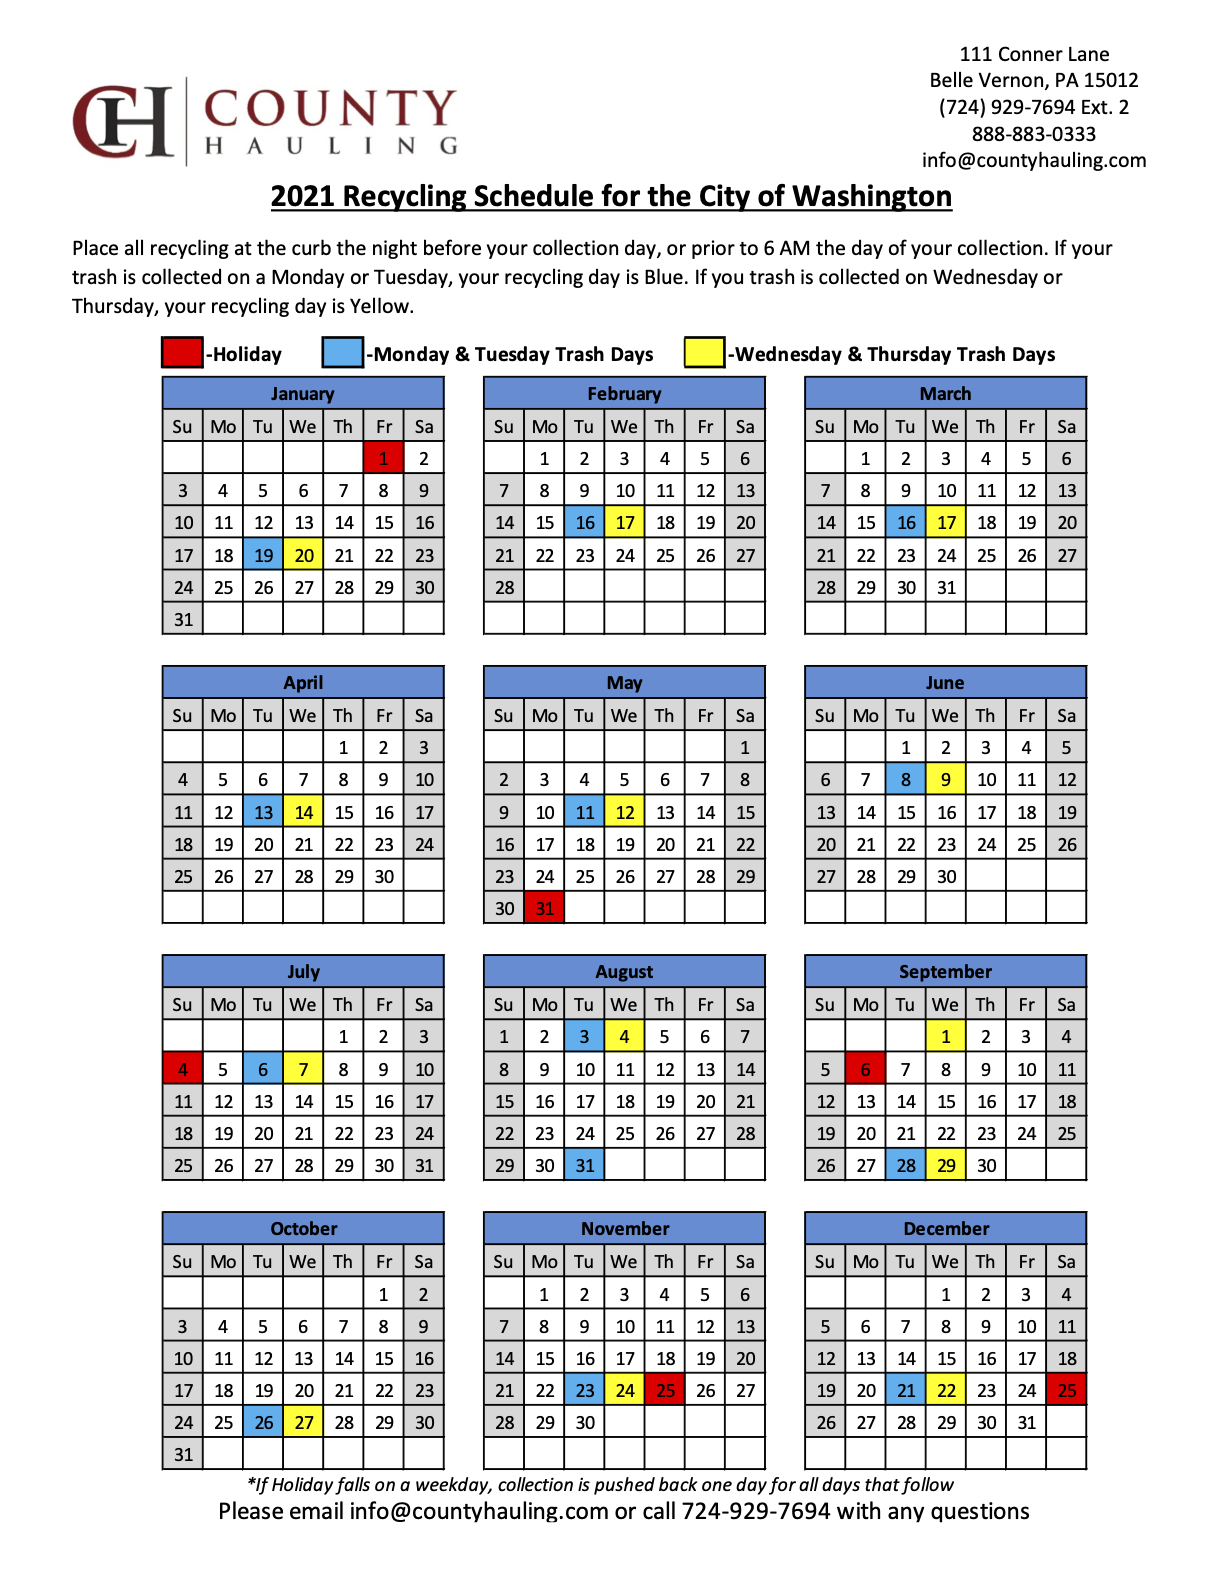 County Hauling 2021 Recycling Calendar City Of Washington